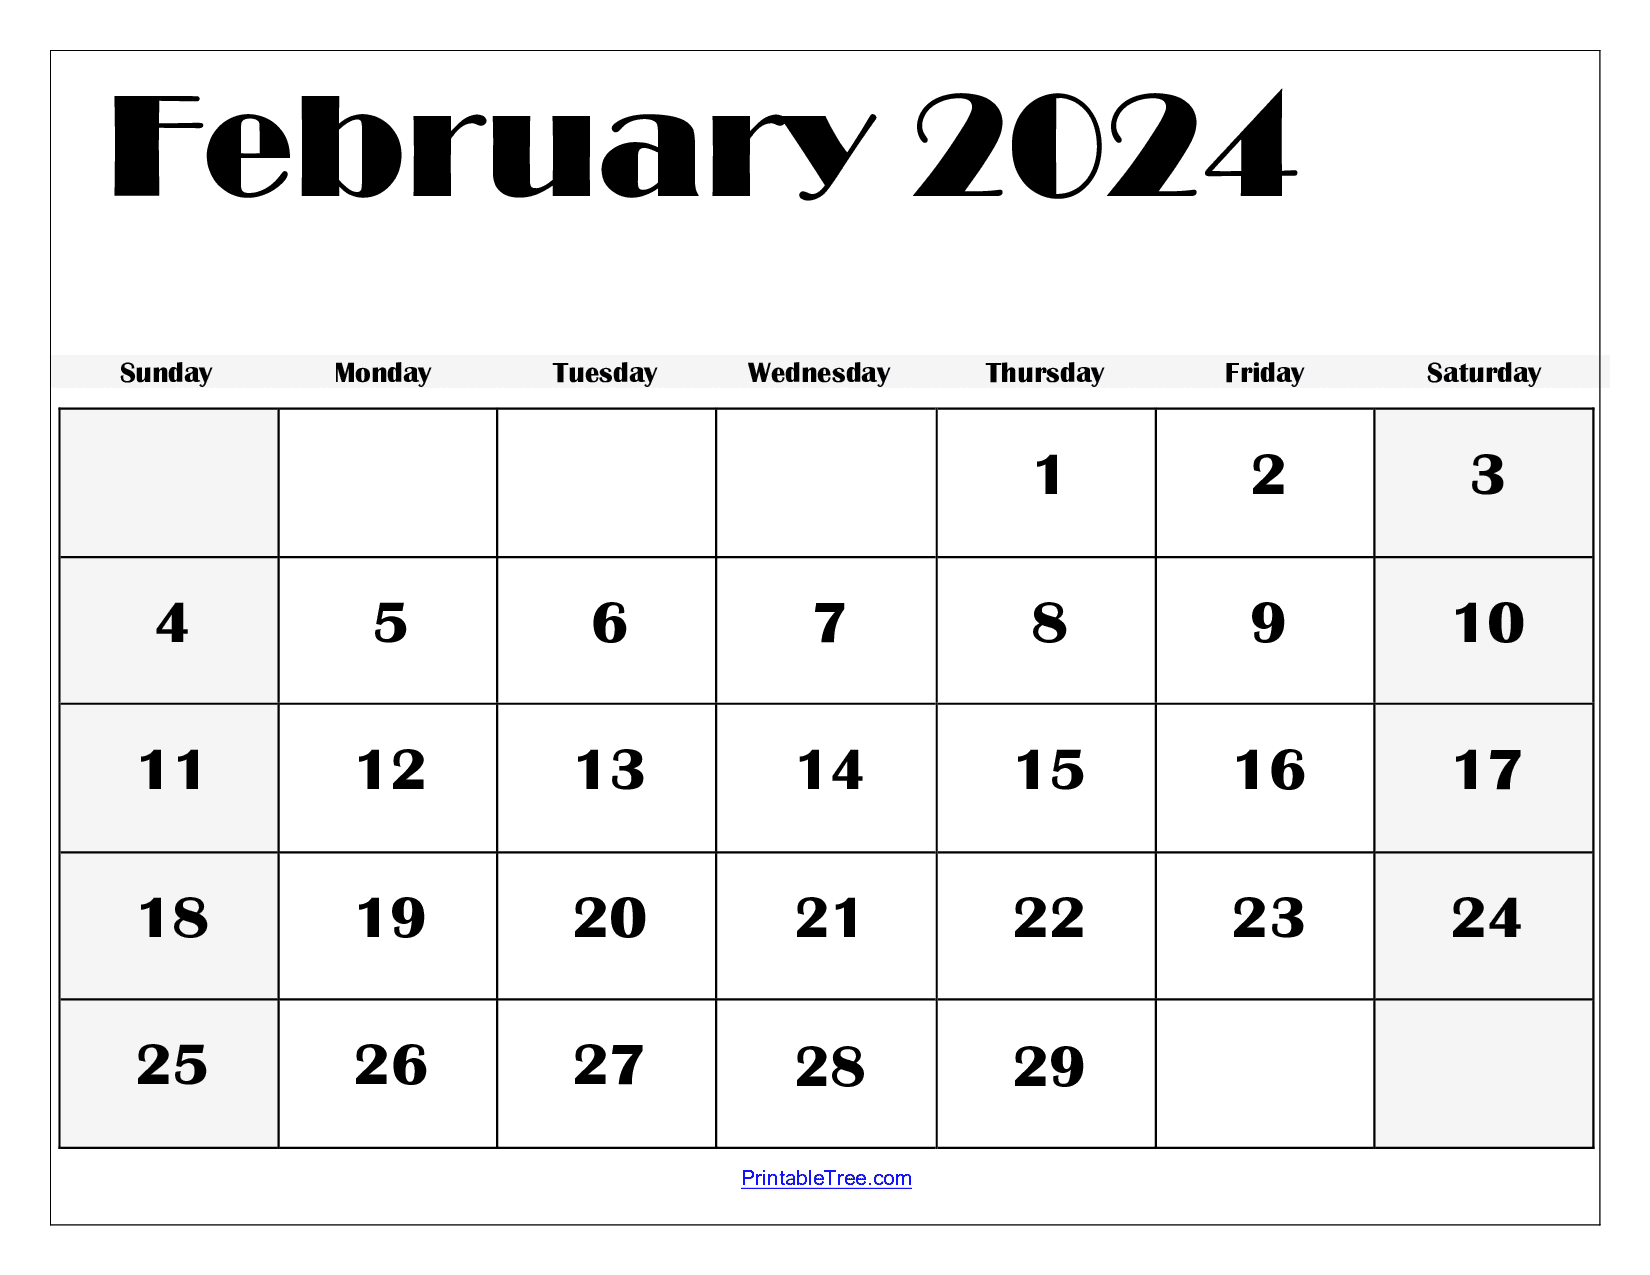 February 2024 Calendar Printable Pdf Template With Holidays for Printable Blank Calendar February 2024